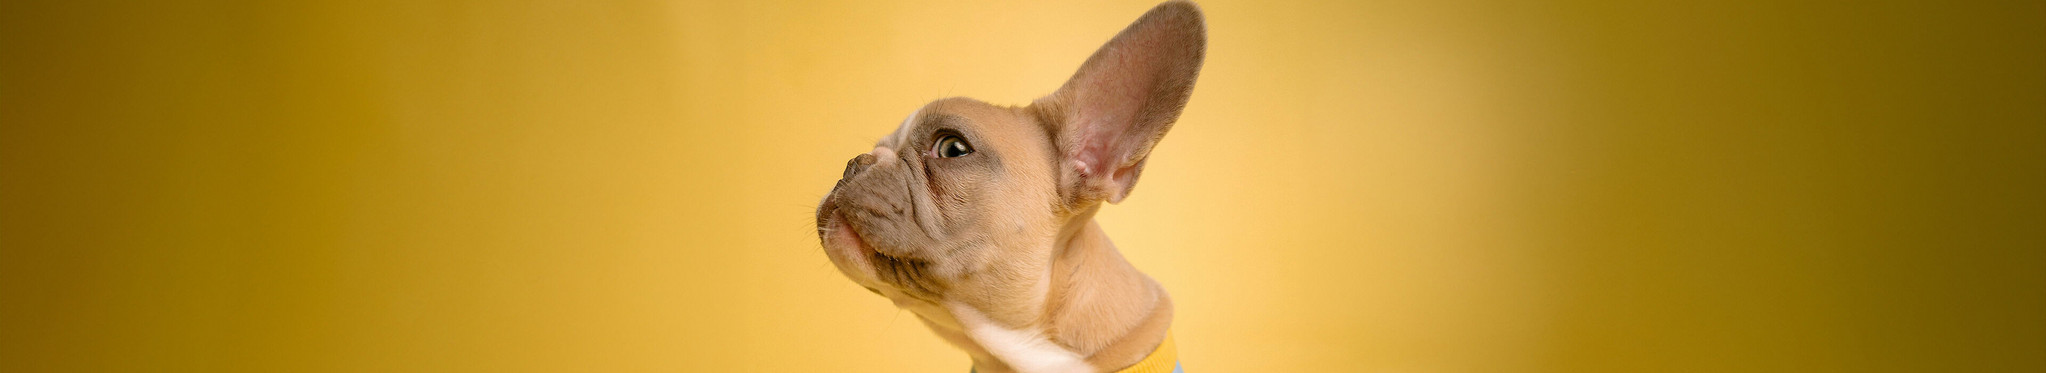 Dog pricks up his ear